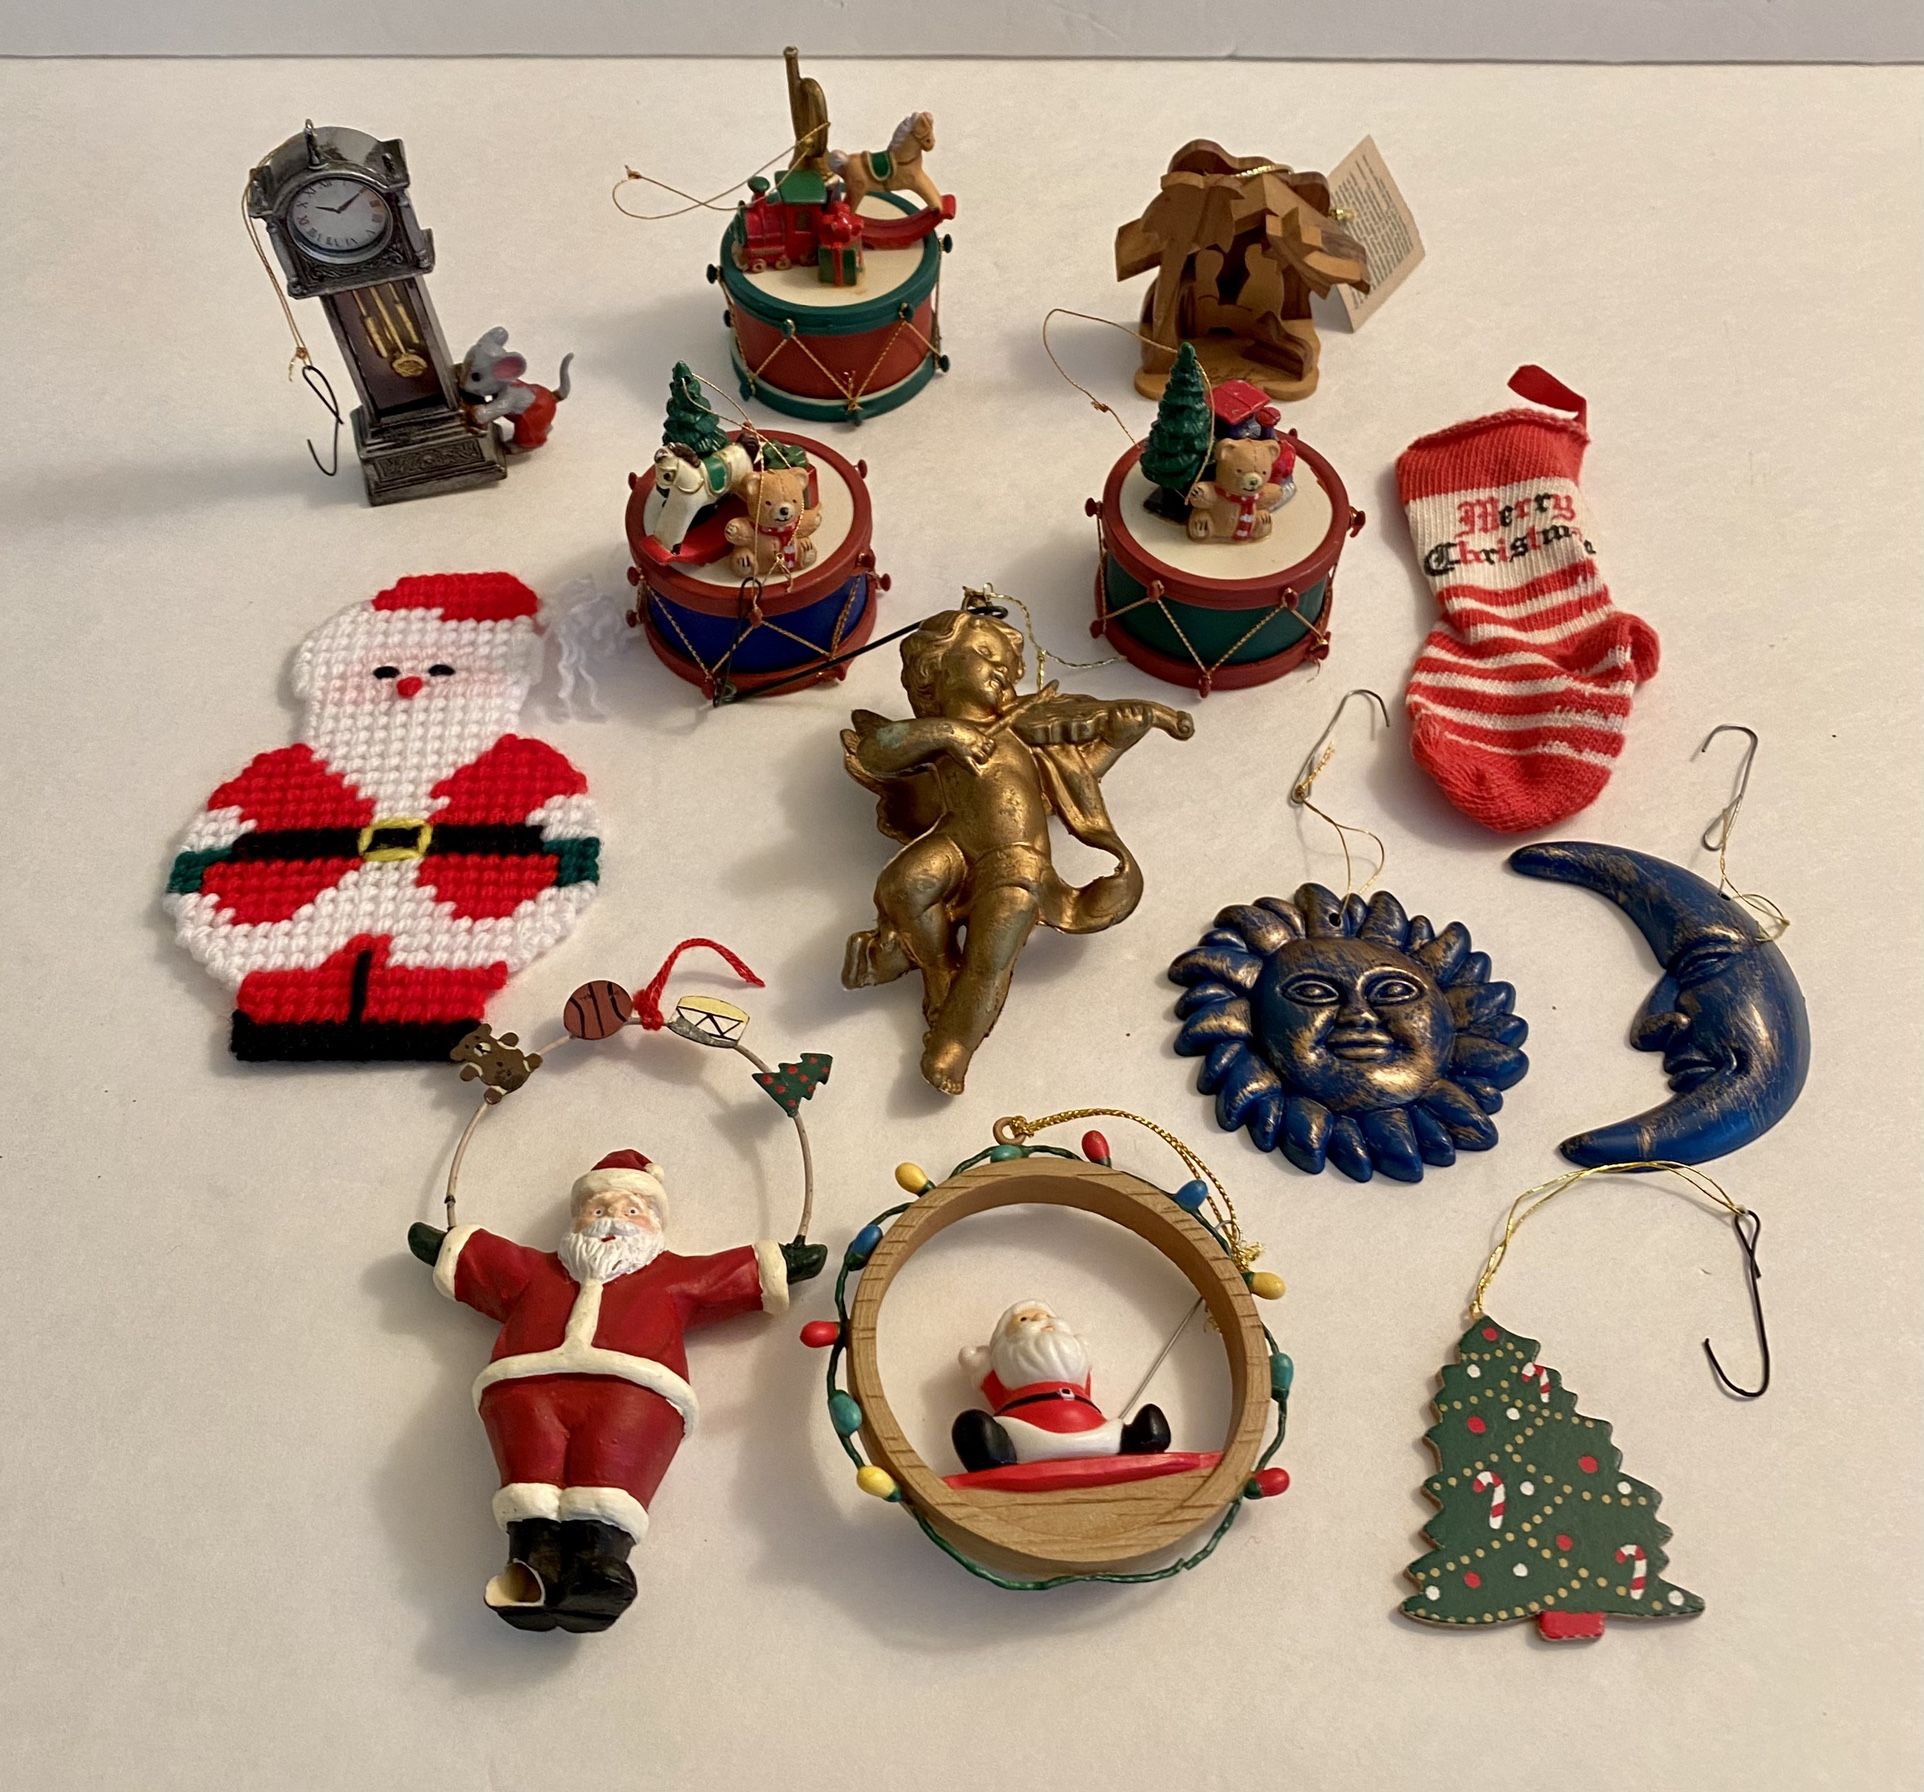 Christmas Ornaments Lot Of 12 Vintage Santa’s Small Drums/Animals Moon/Sun